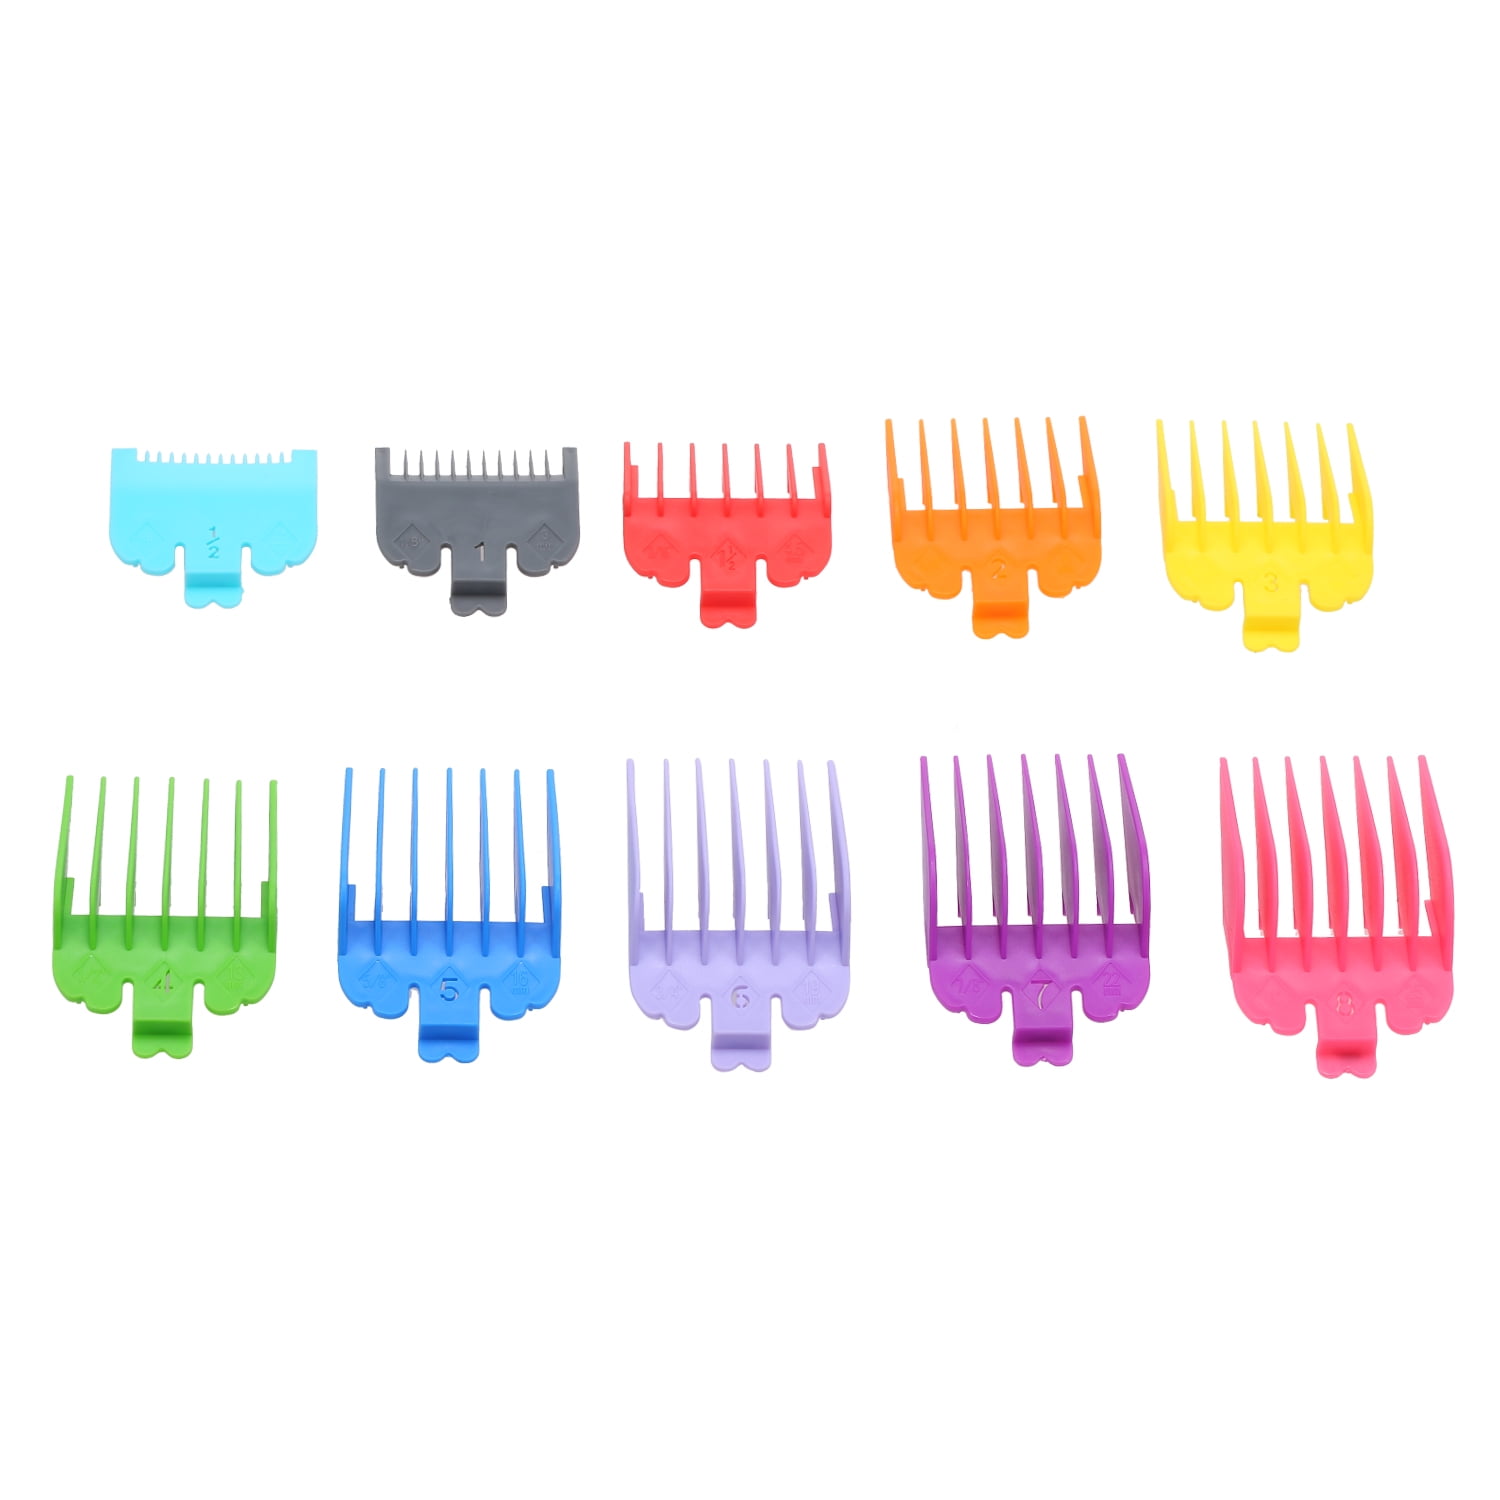 hair clipper guide combs